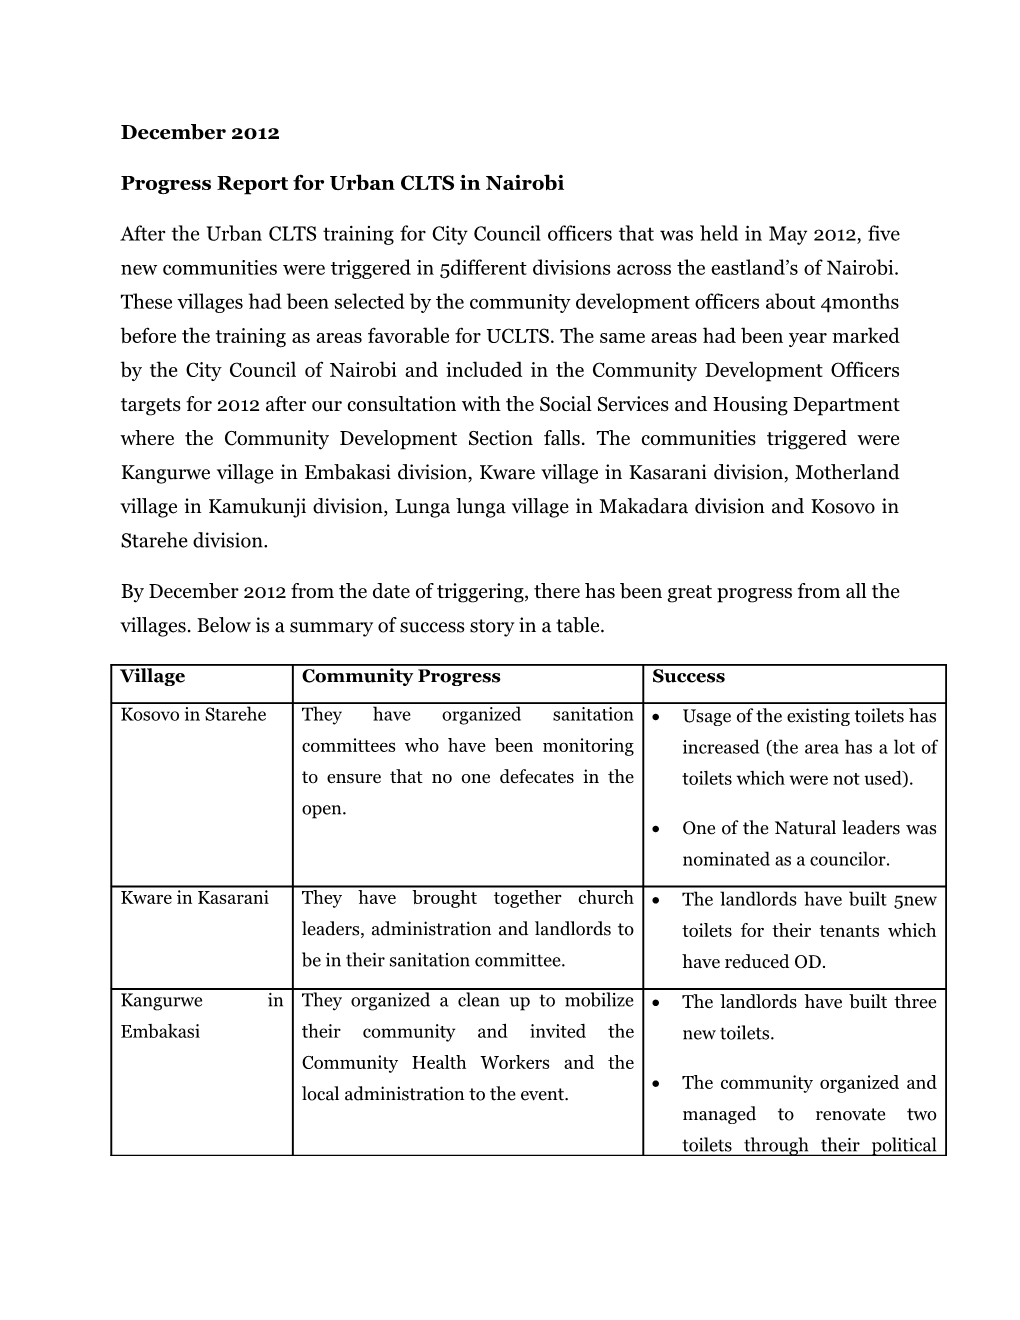 Progress Report for Urban CLTS in Nairobi